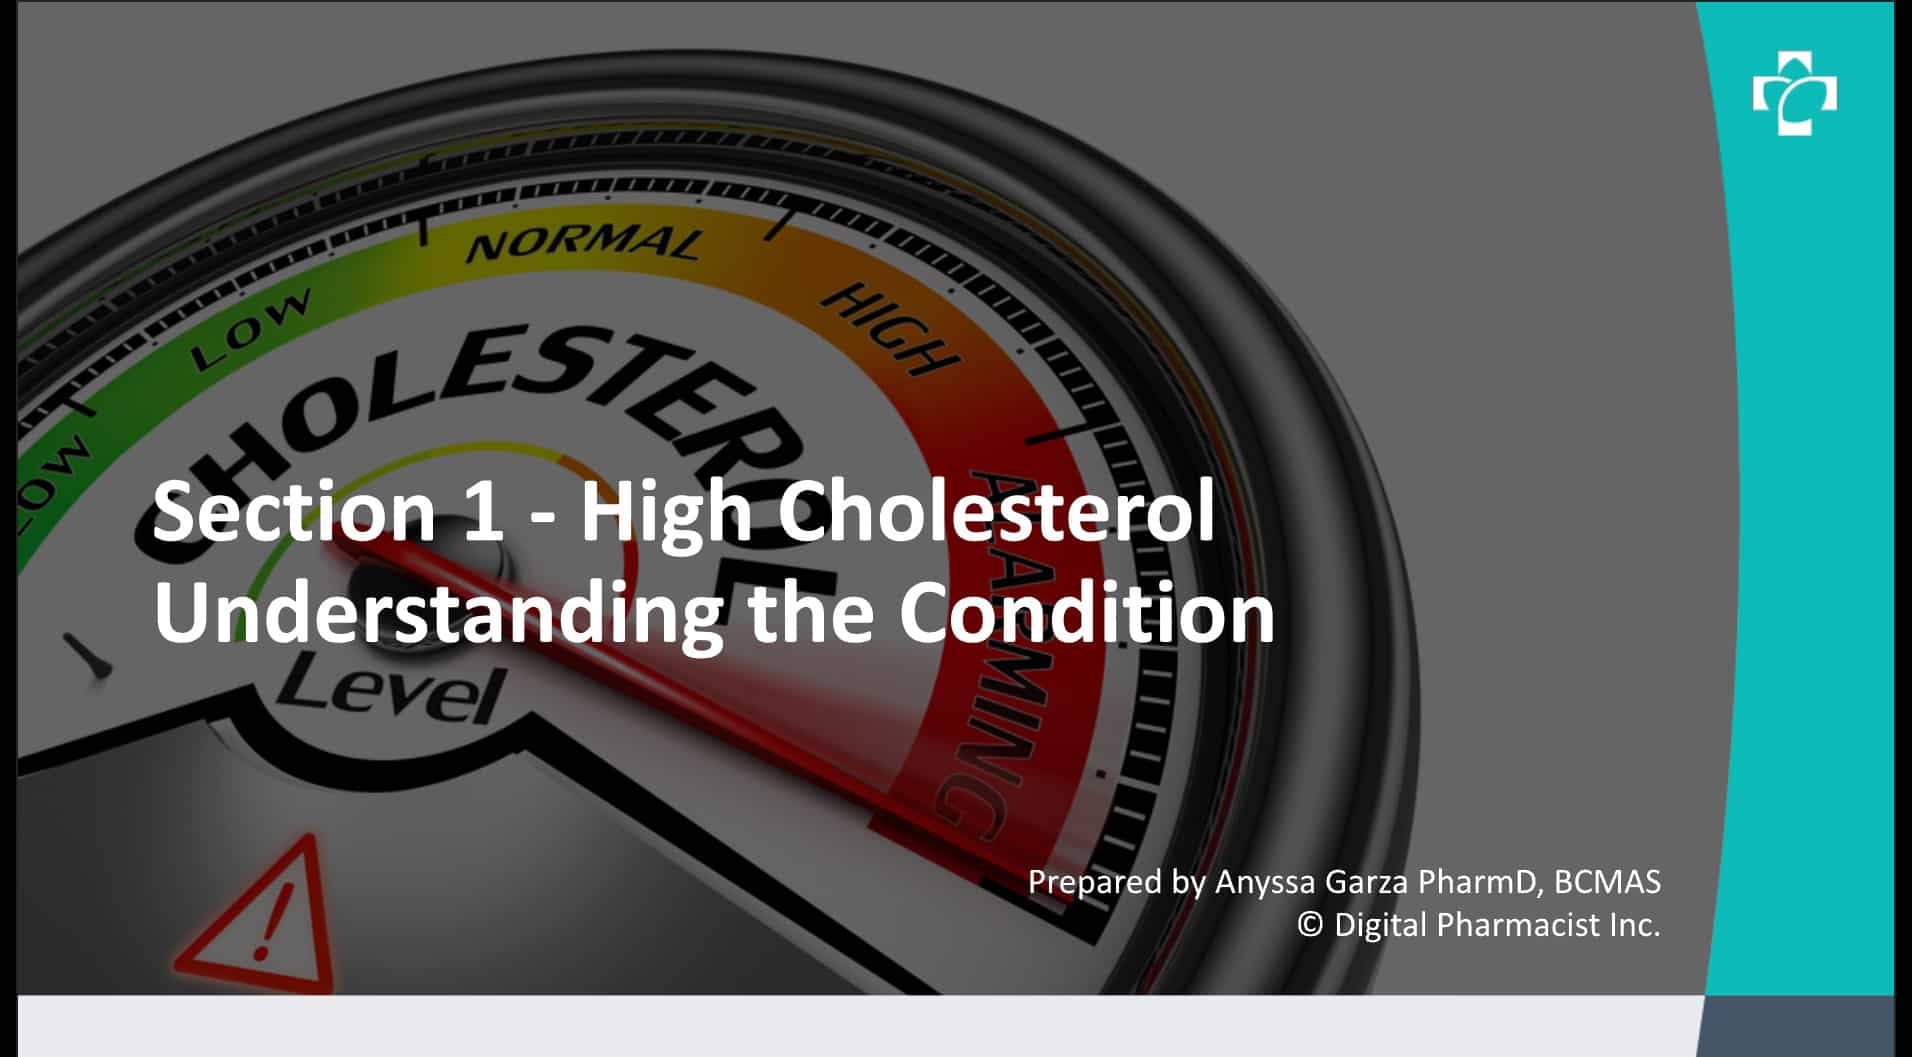 High Cholesterol